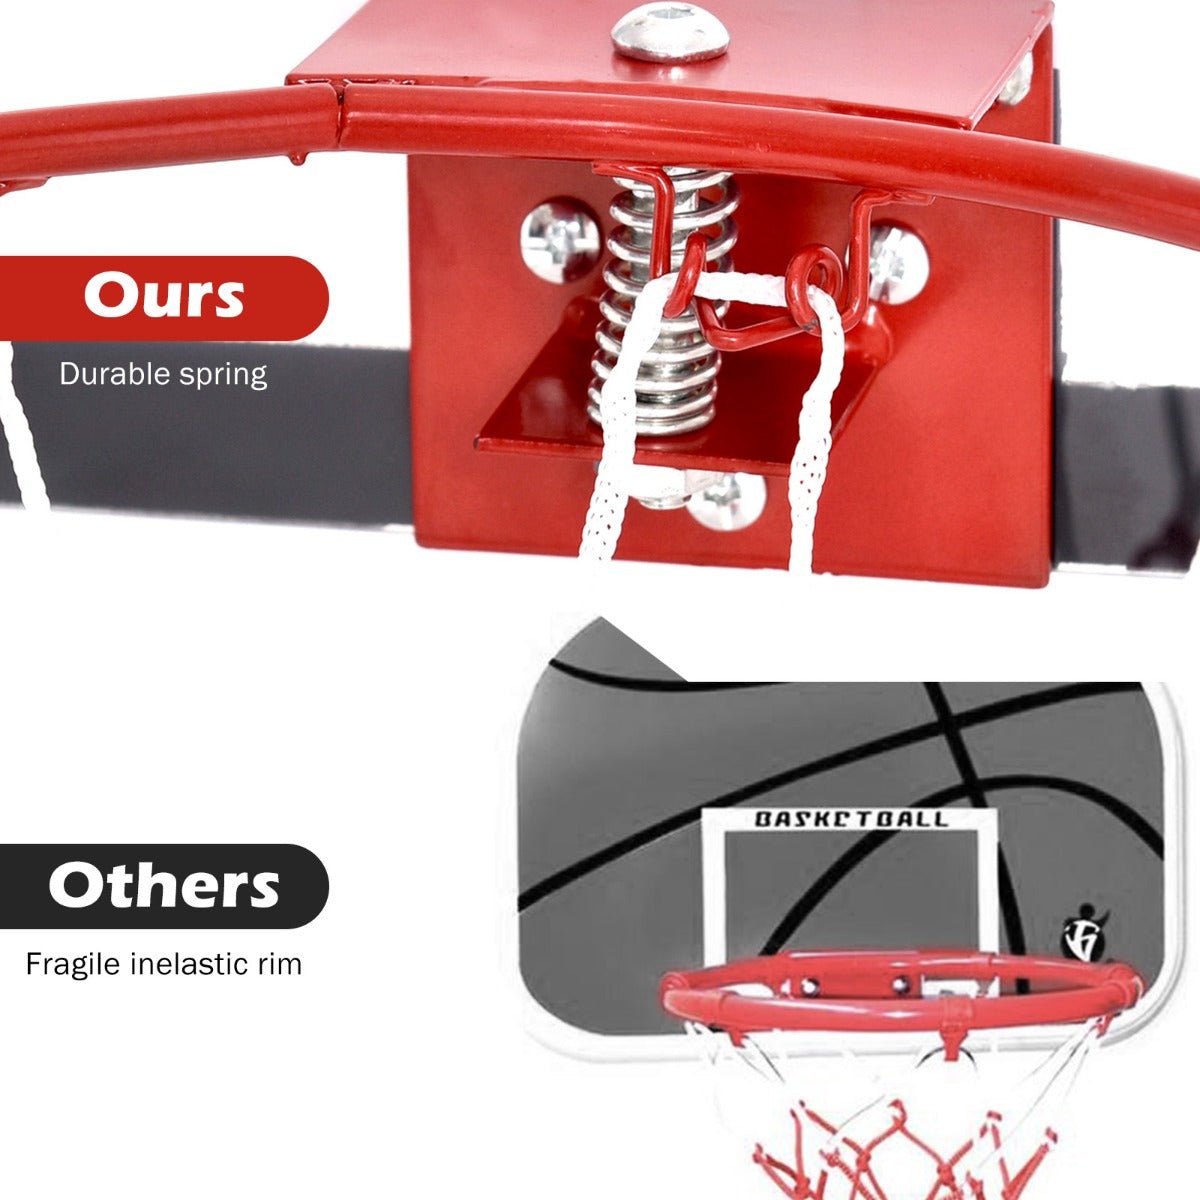 Play Ball Anytime: Mini Basketball Hoop Set with Shatterproof Backboard